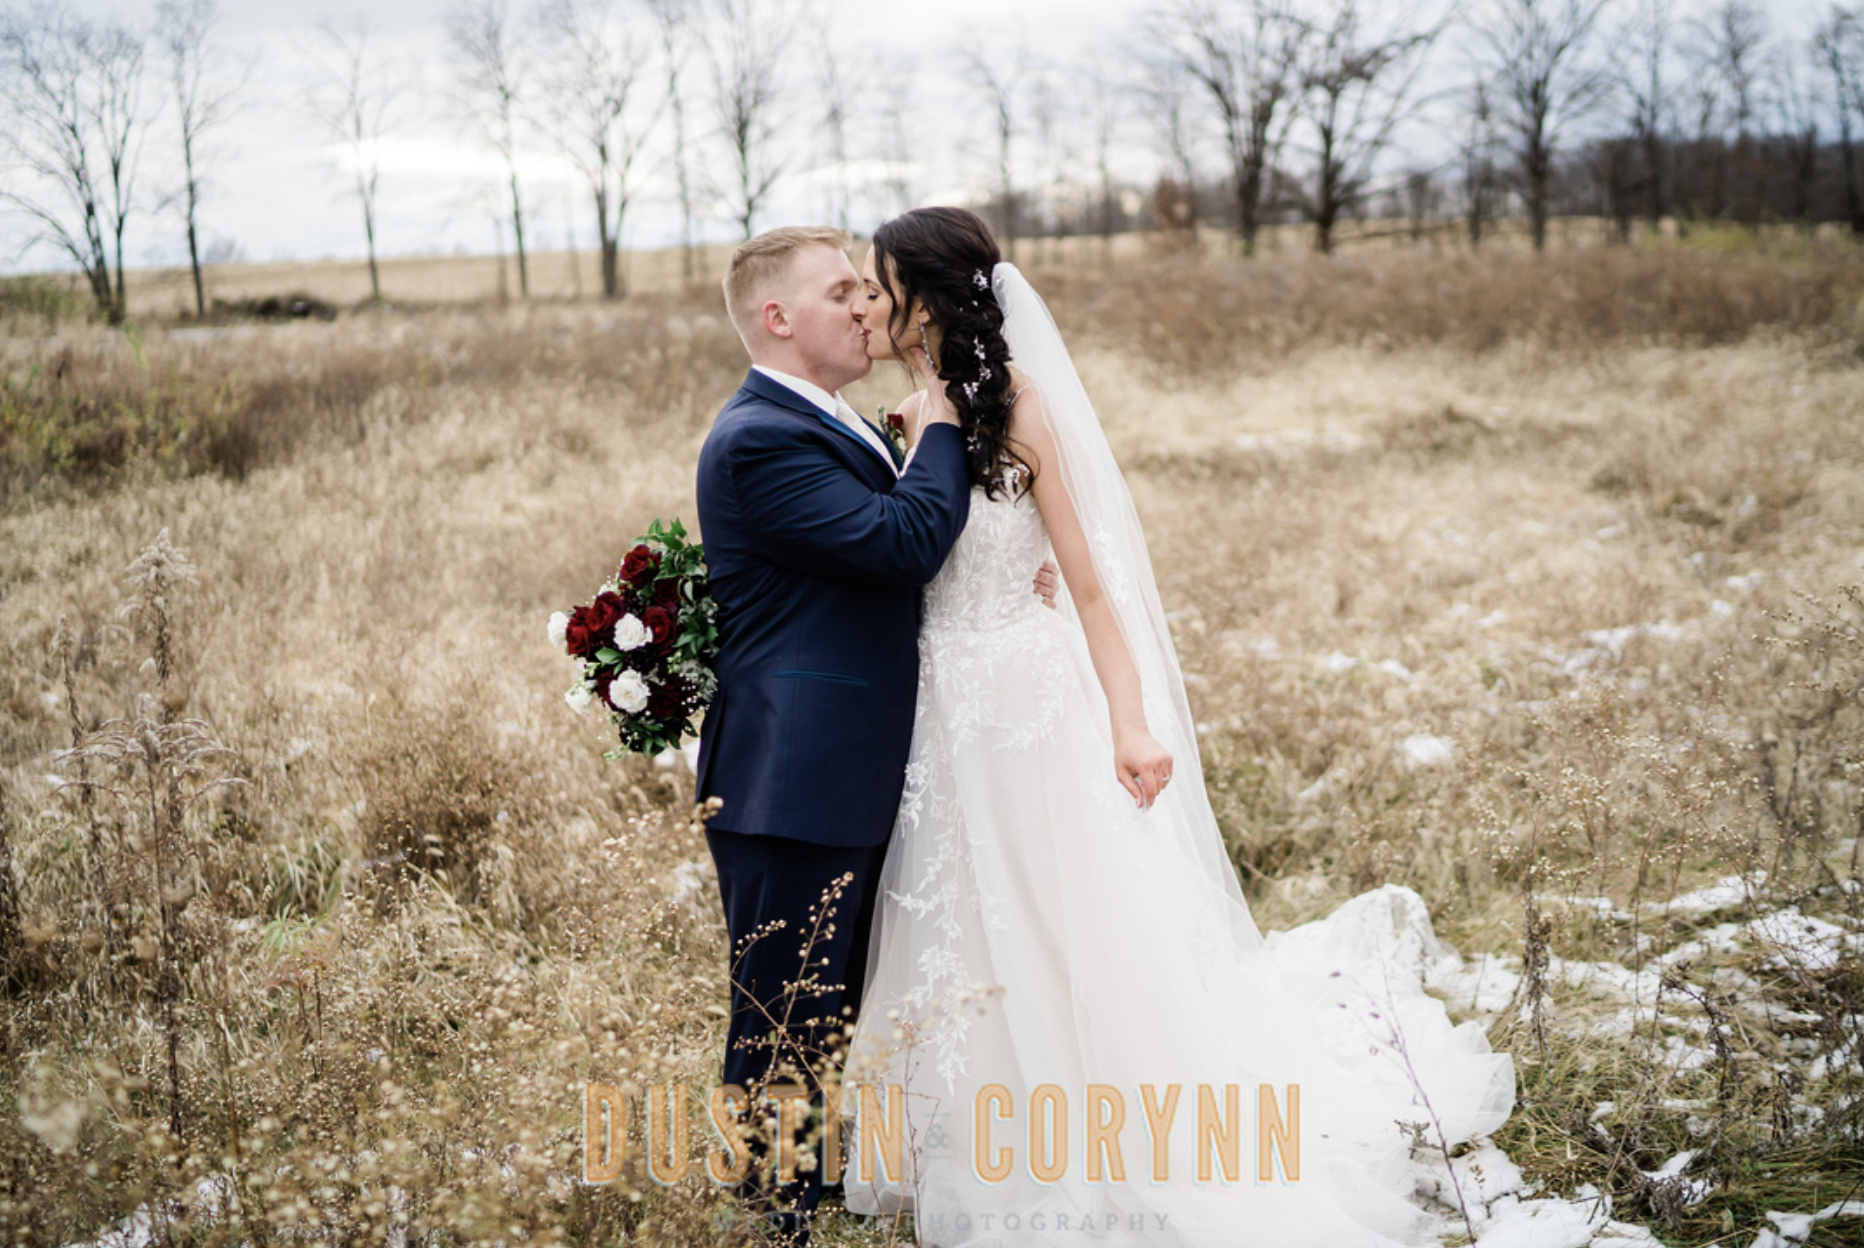 Fort Wayne wedding photographer captures bride and groom kissing in field